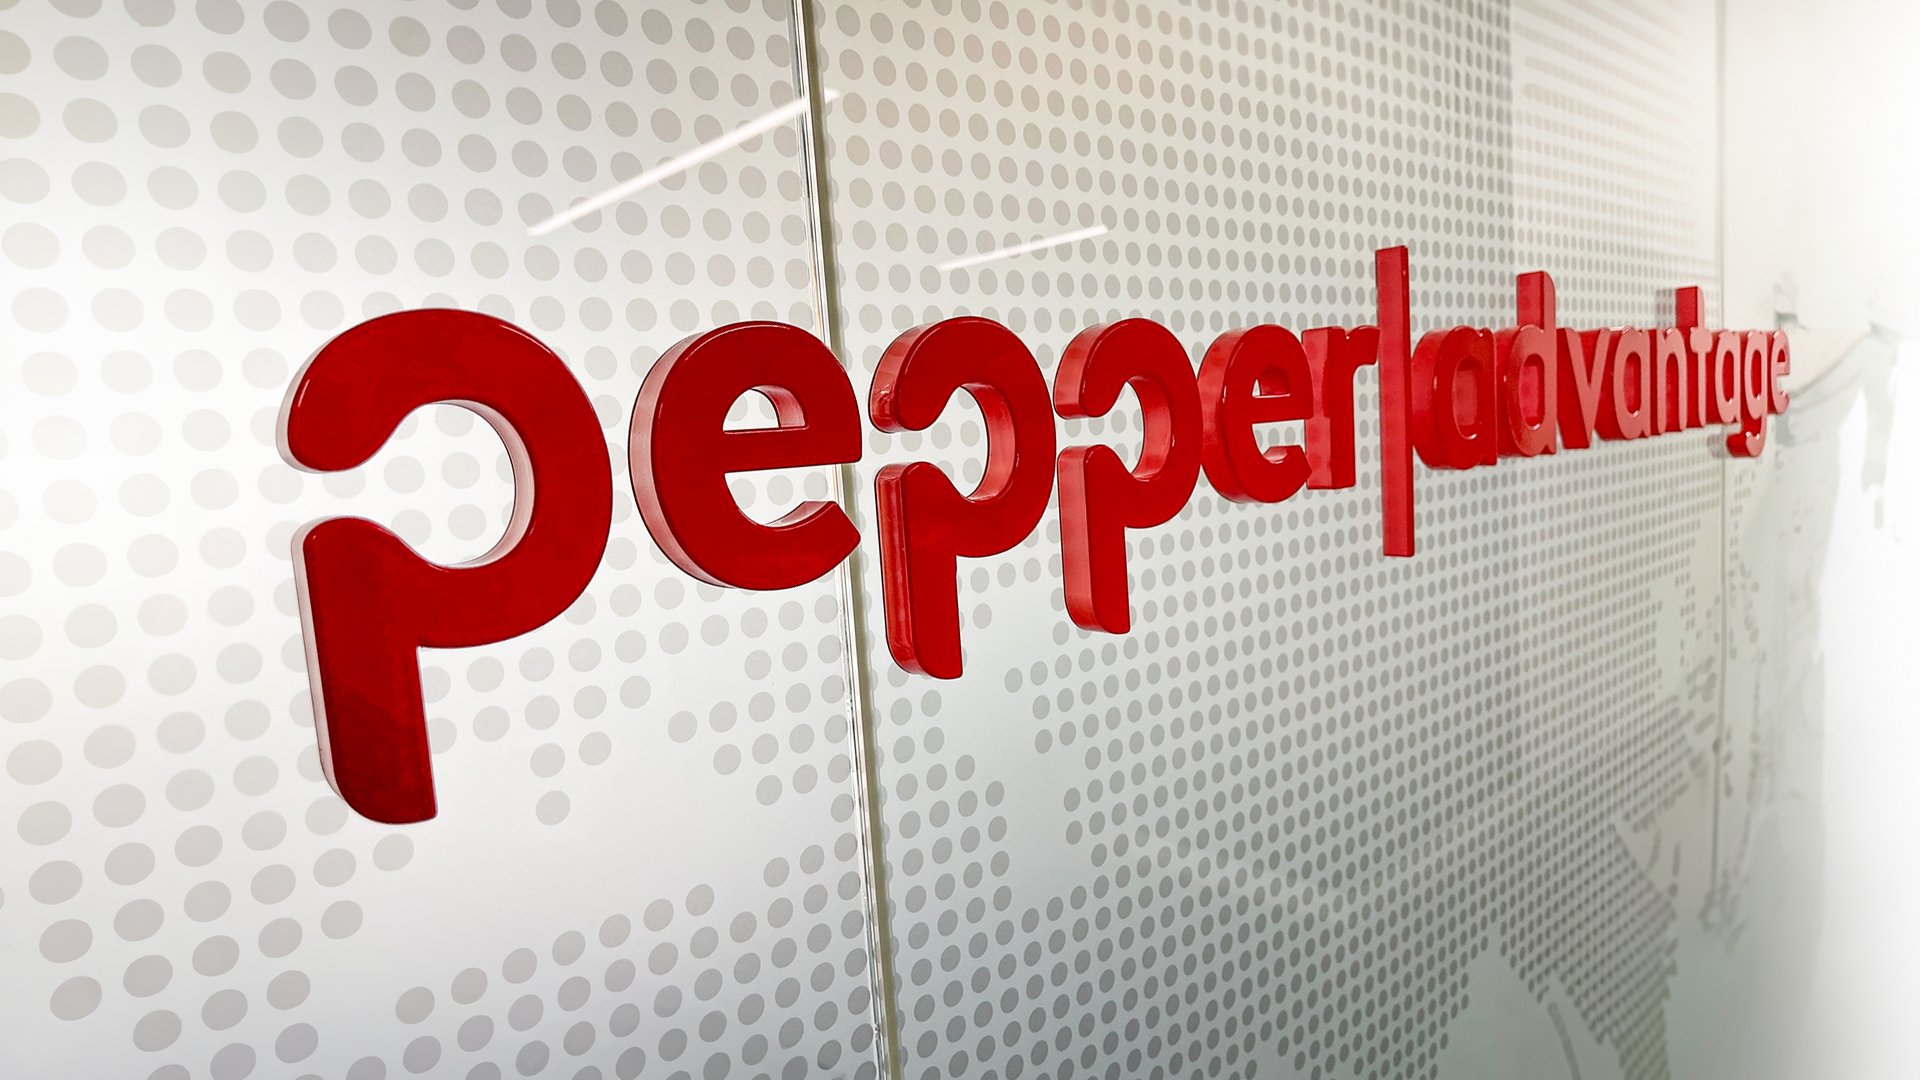 Pepper Advantage Ireland Company updates banner